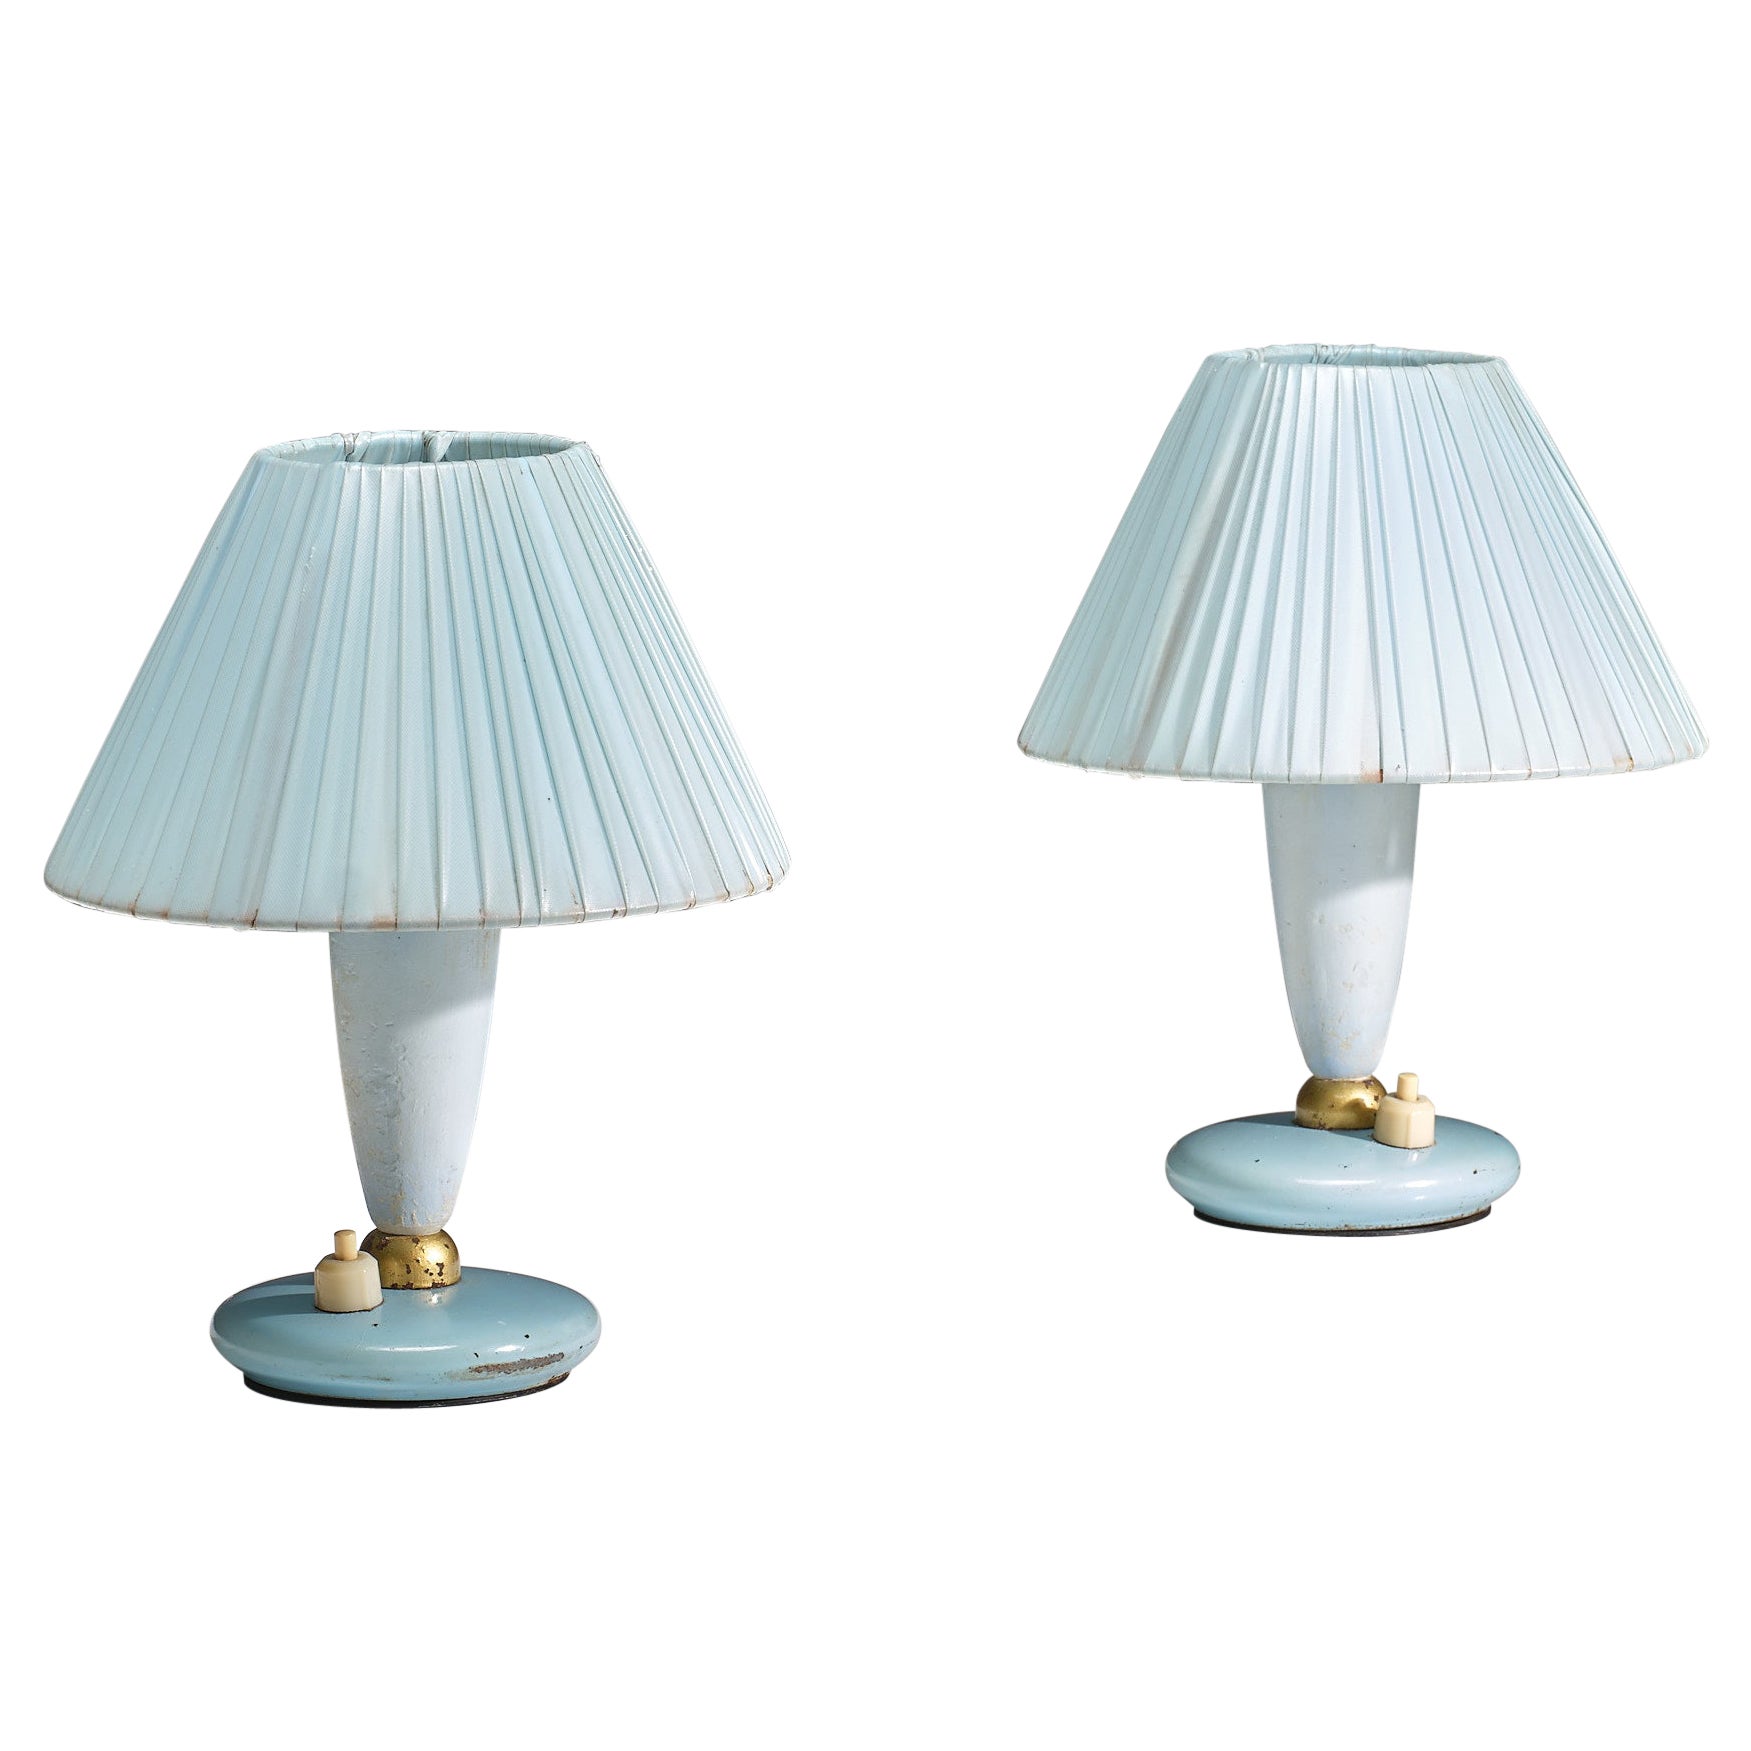 Pair of 1950s Italian Midcentury Modern Blue Bedside Lamps